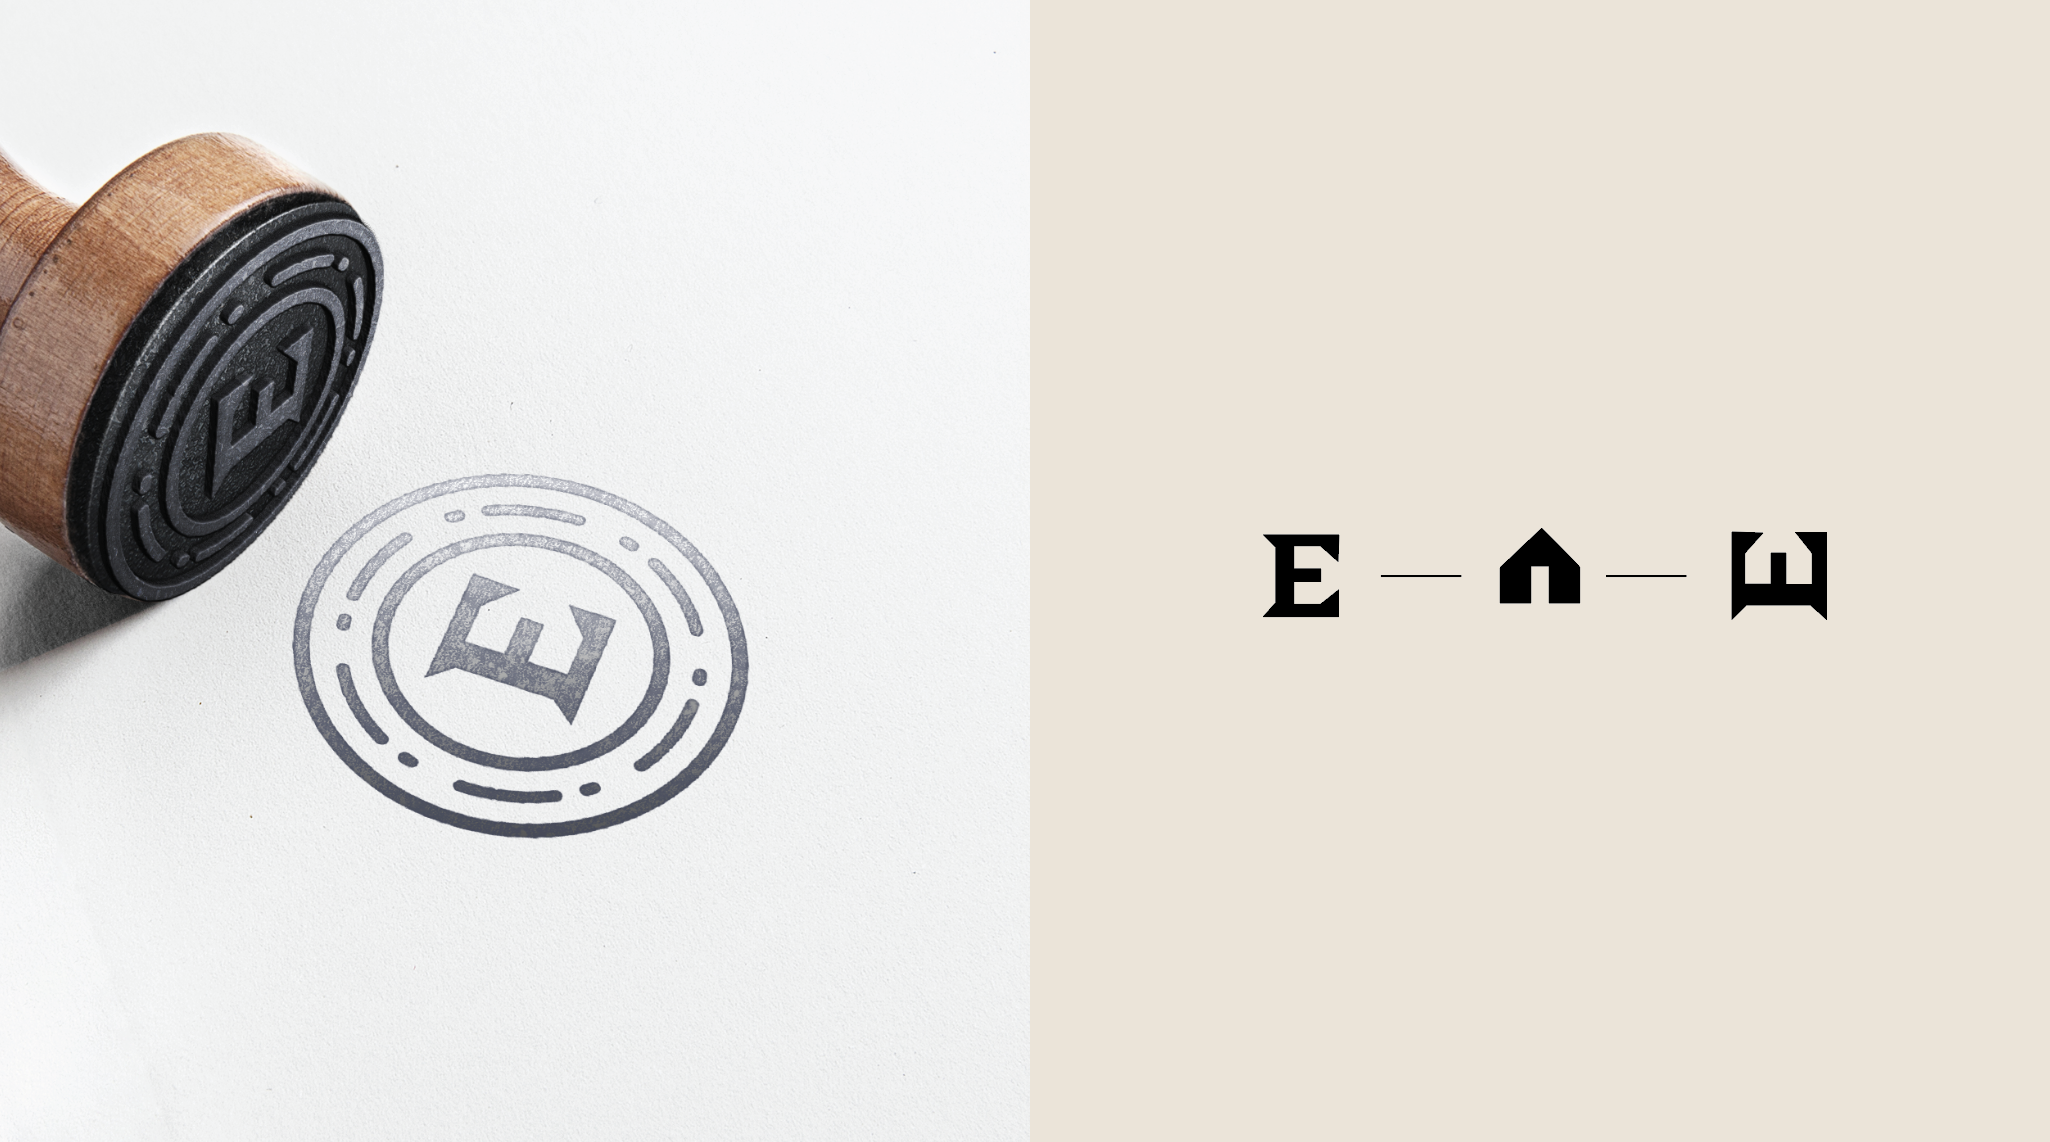 Santa Eulalia’s Clever Logo Tucks a Little House Into Their Monogram